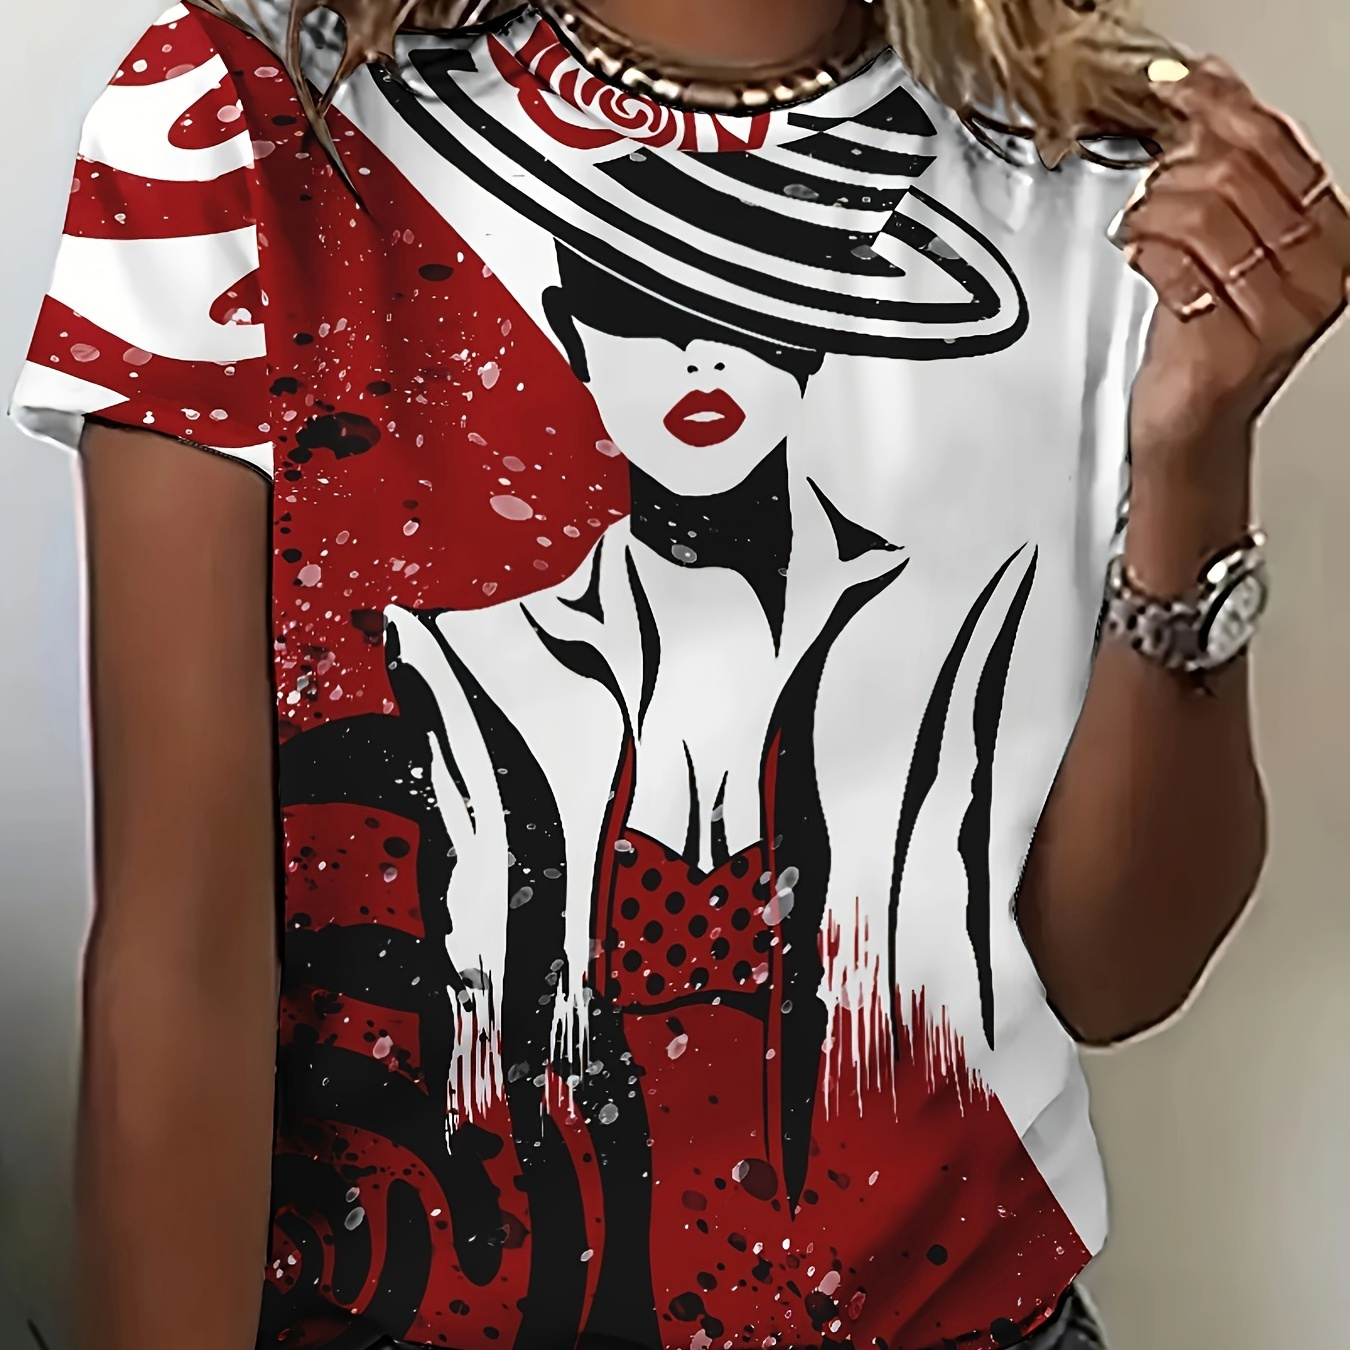 

Women's Fashion T-shirt With 3d Print, Vintage Artistic Portrait Design, Short Sleeve Casual Top